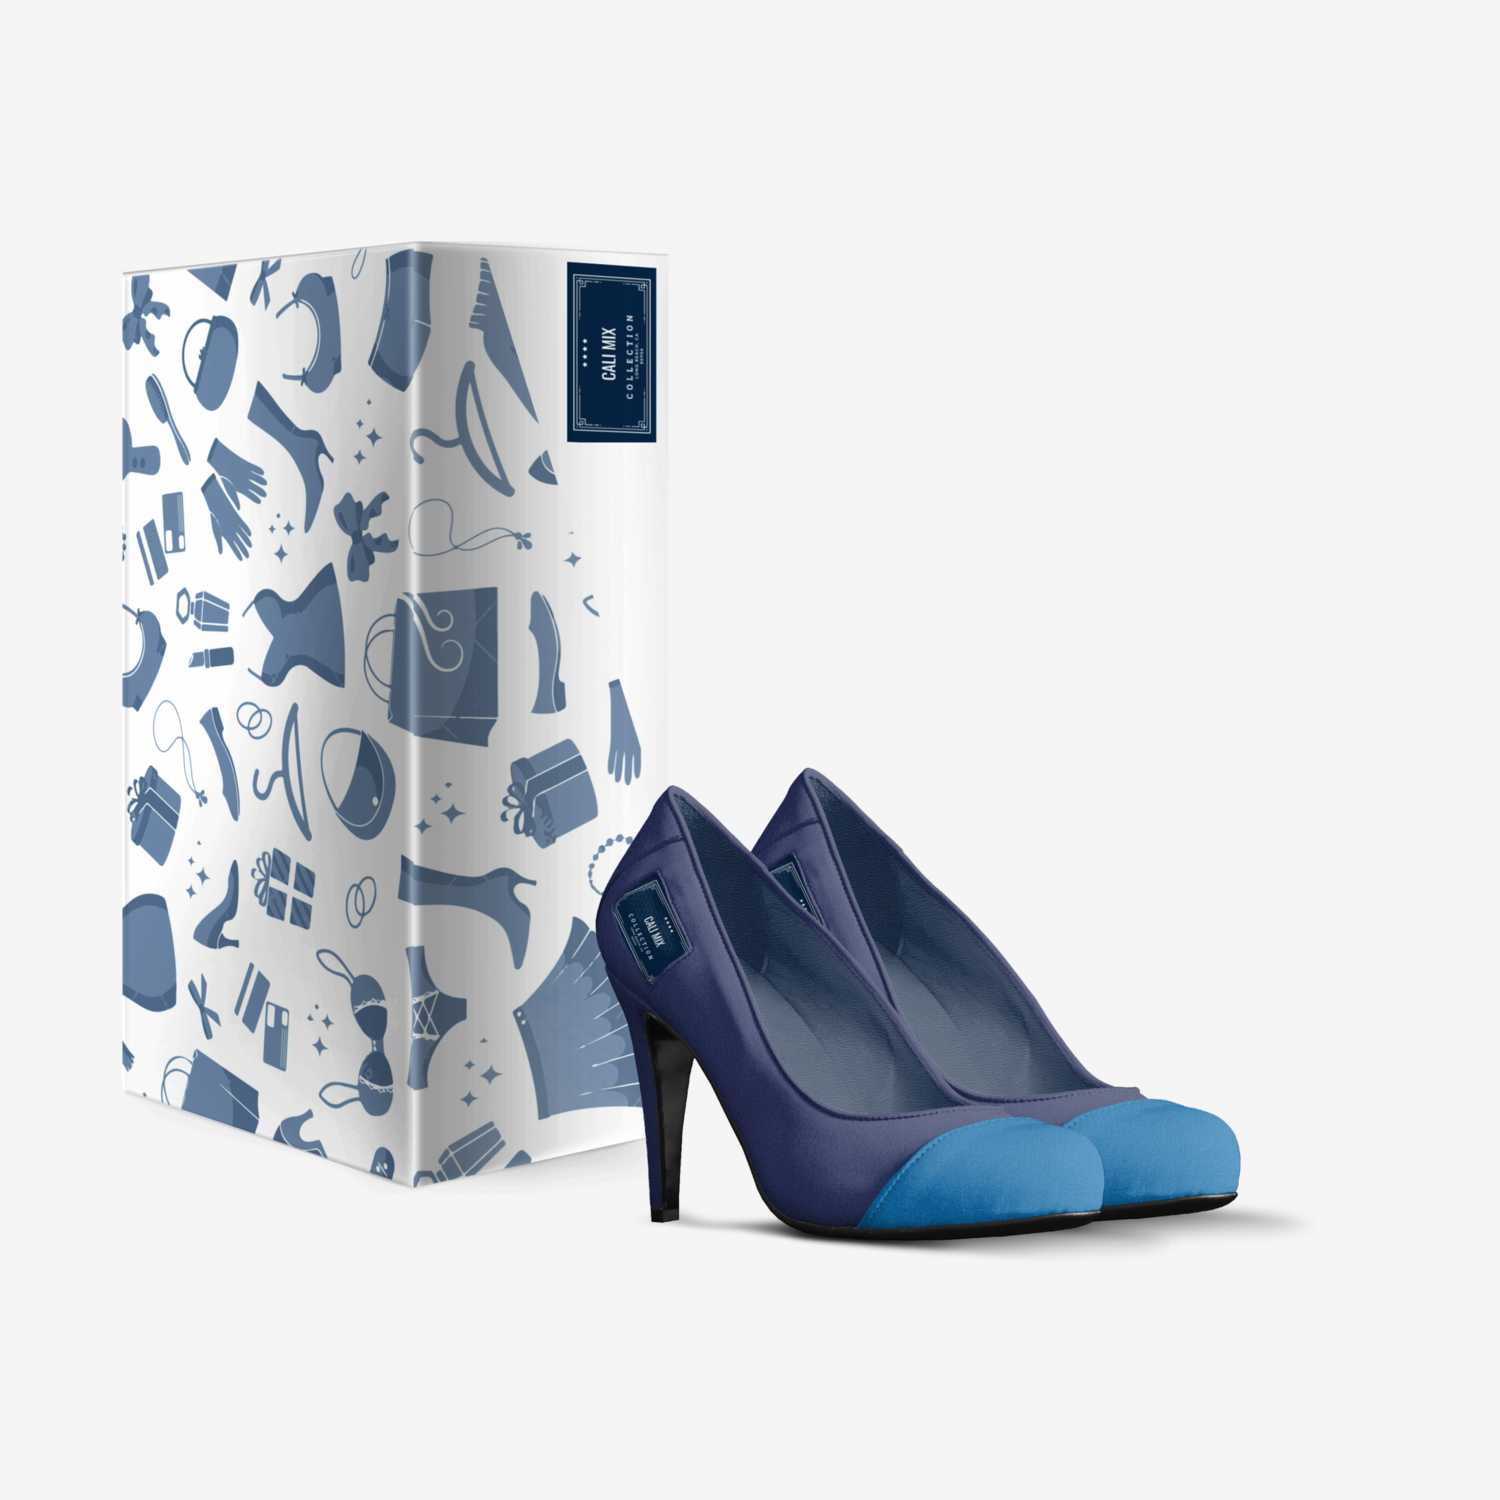 Cali Mix custom made in Italy shoes by Natasha Robinson | Box view